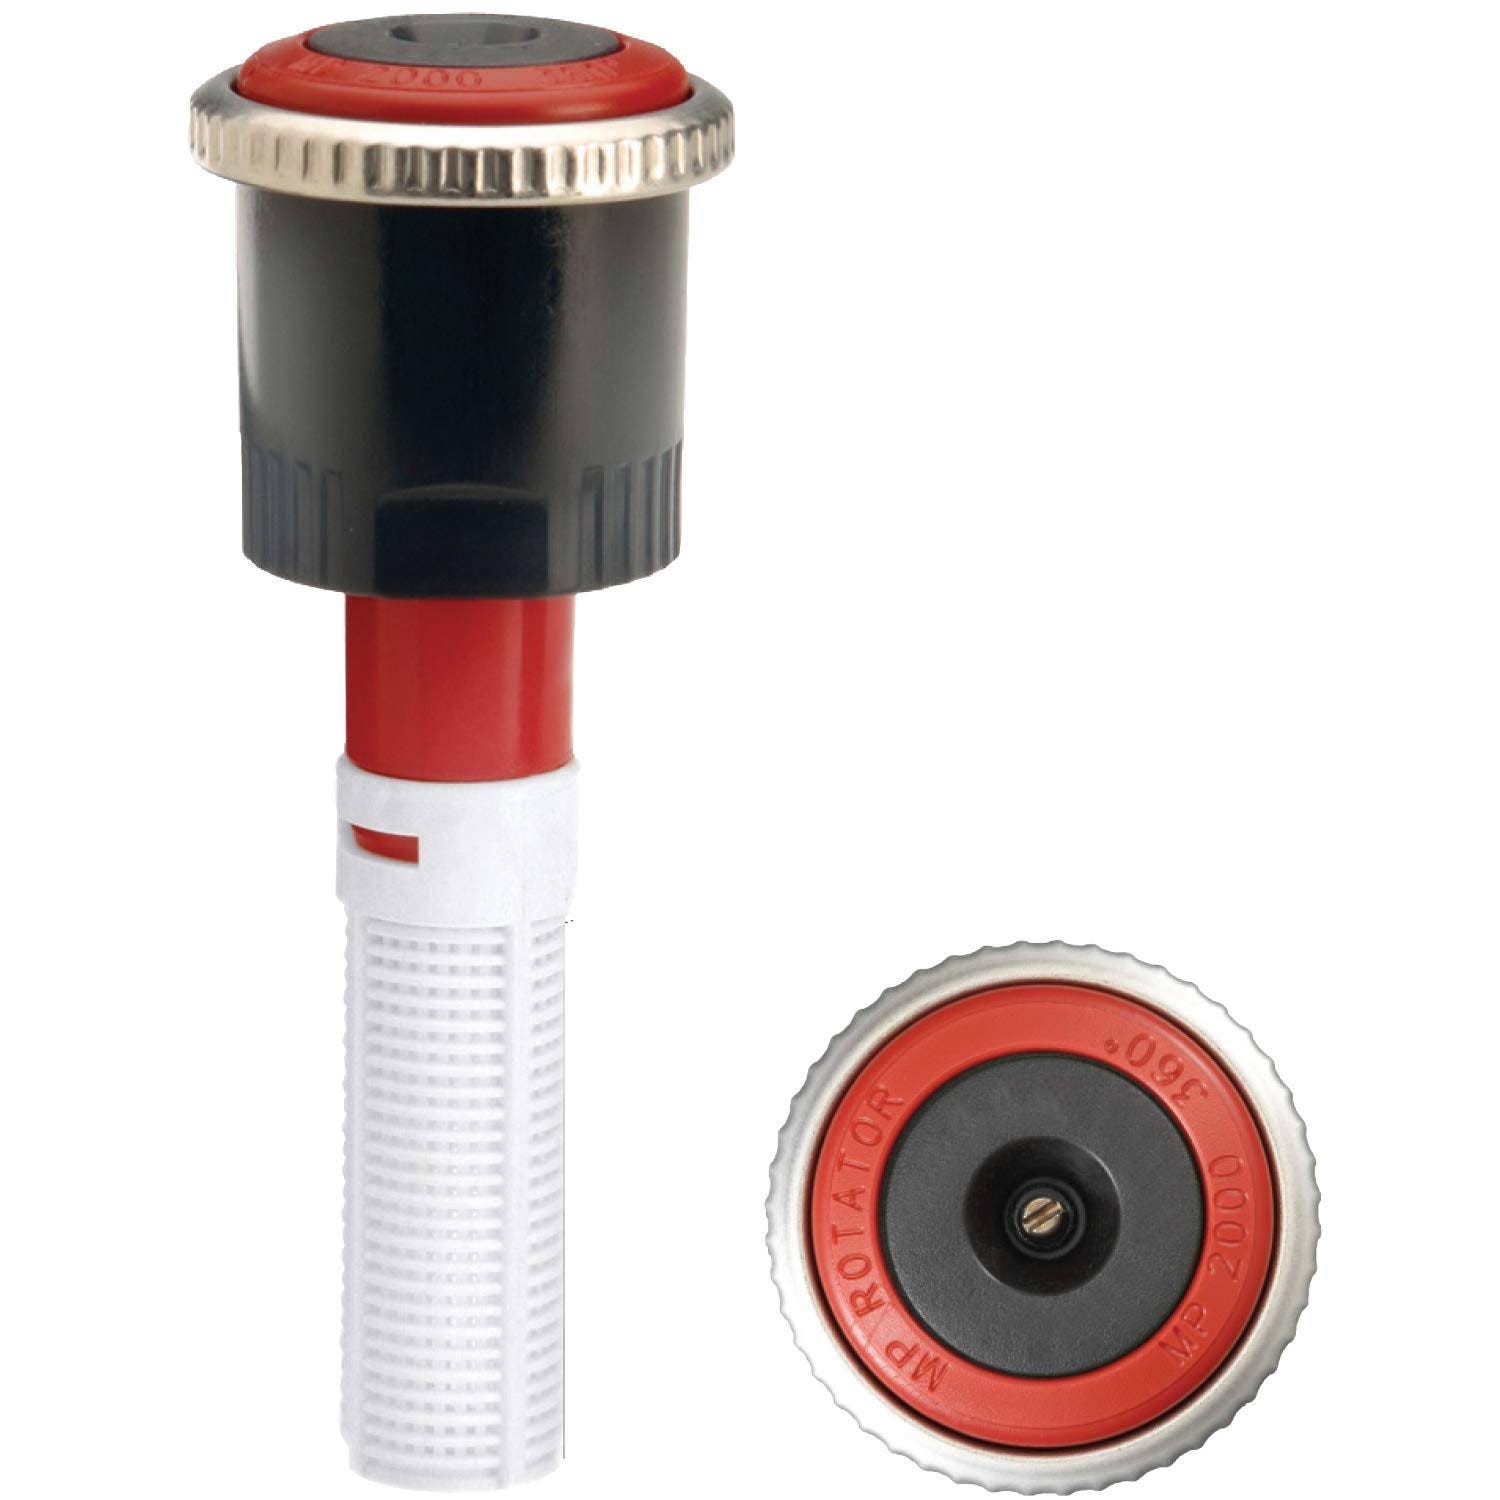 Hunter Industries MP Rotator MP2000 360° High-Efficiency Sprinkler Nozzle in Red | Image